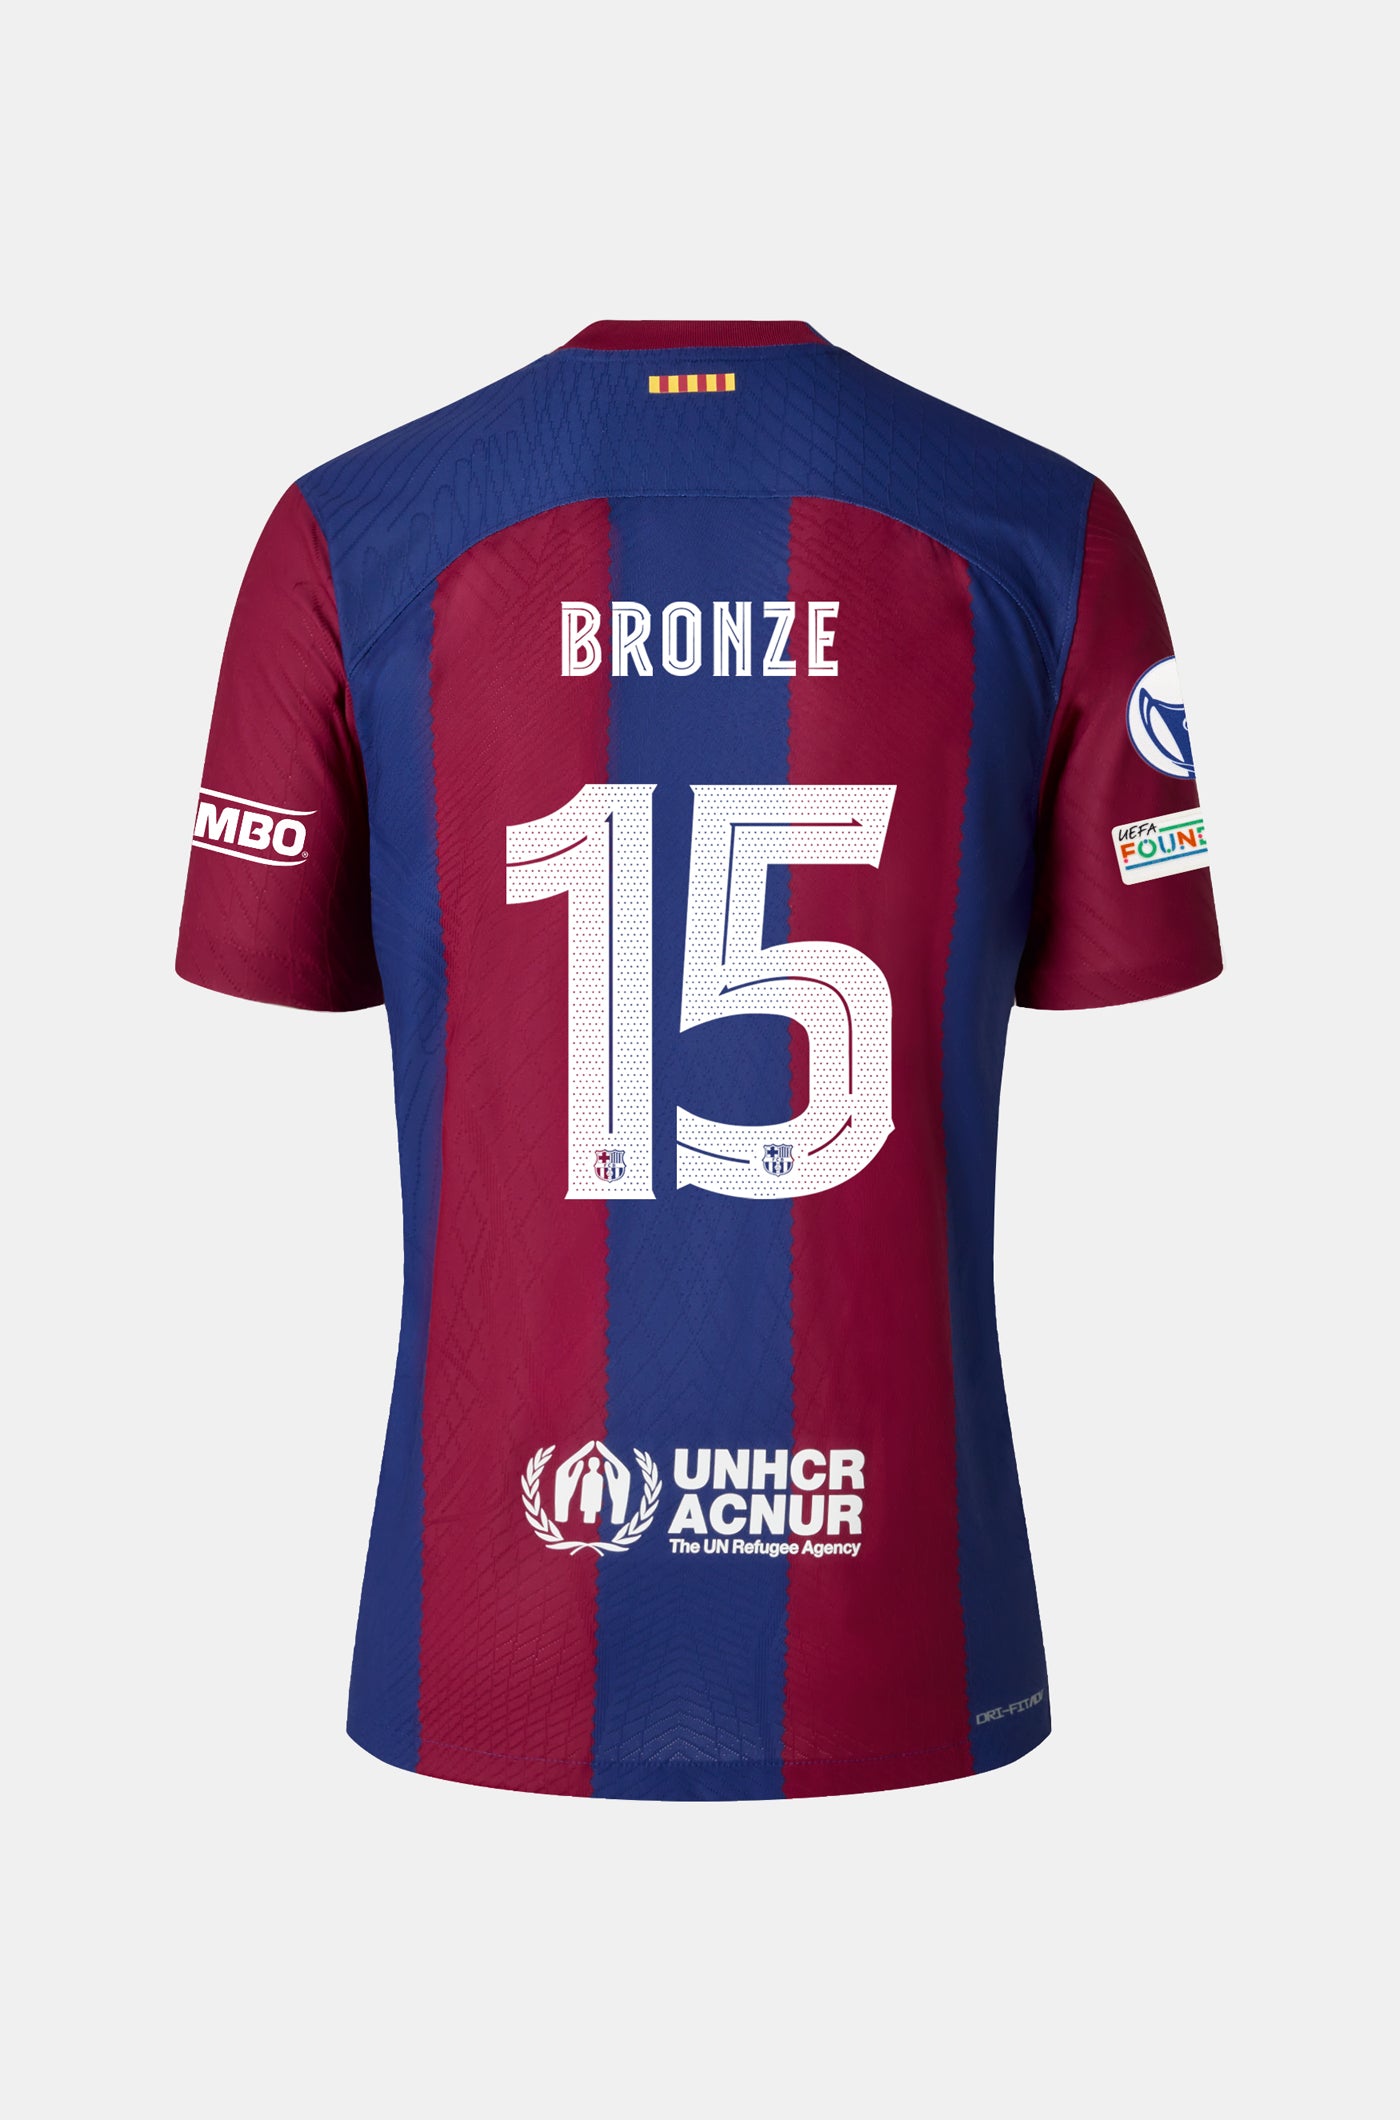 UWCL FC Barcelona home shirt 23/24 - Women - BRONZE